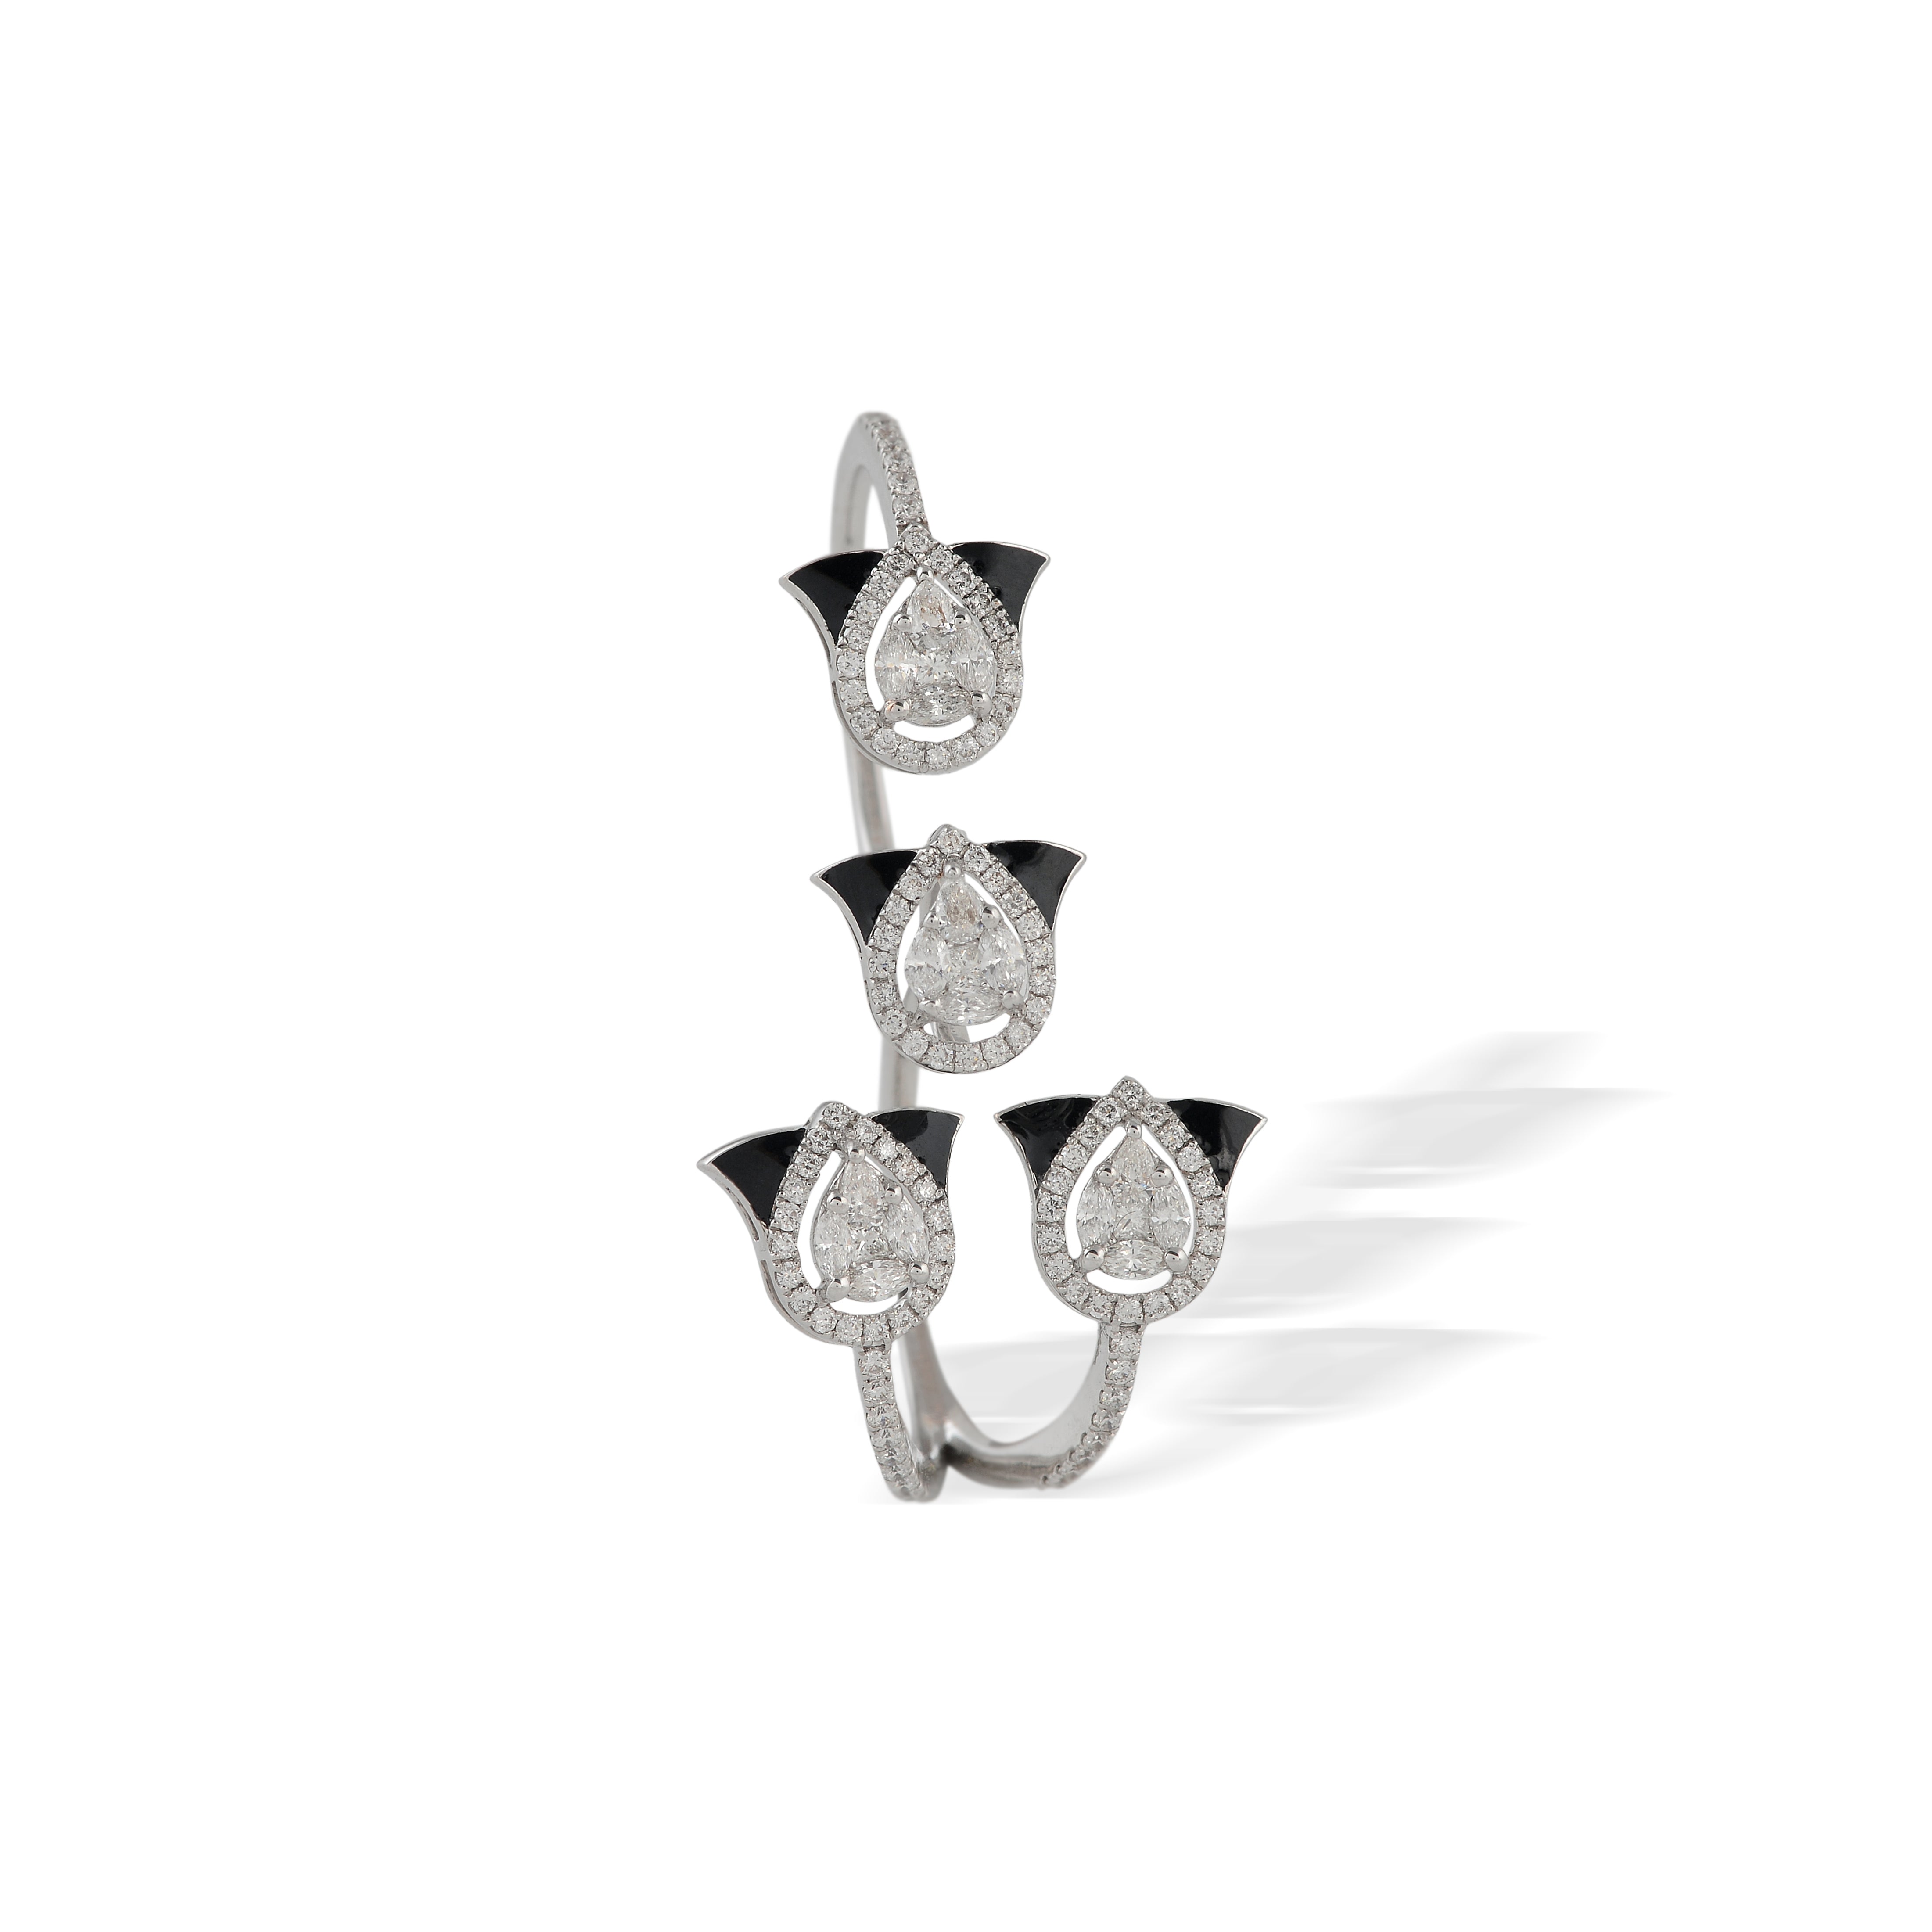 Double Ring Pear Cut Diamond Ring